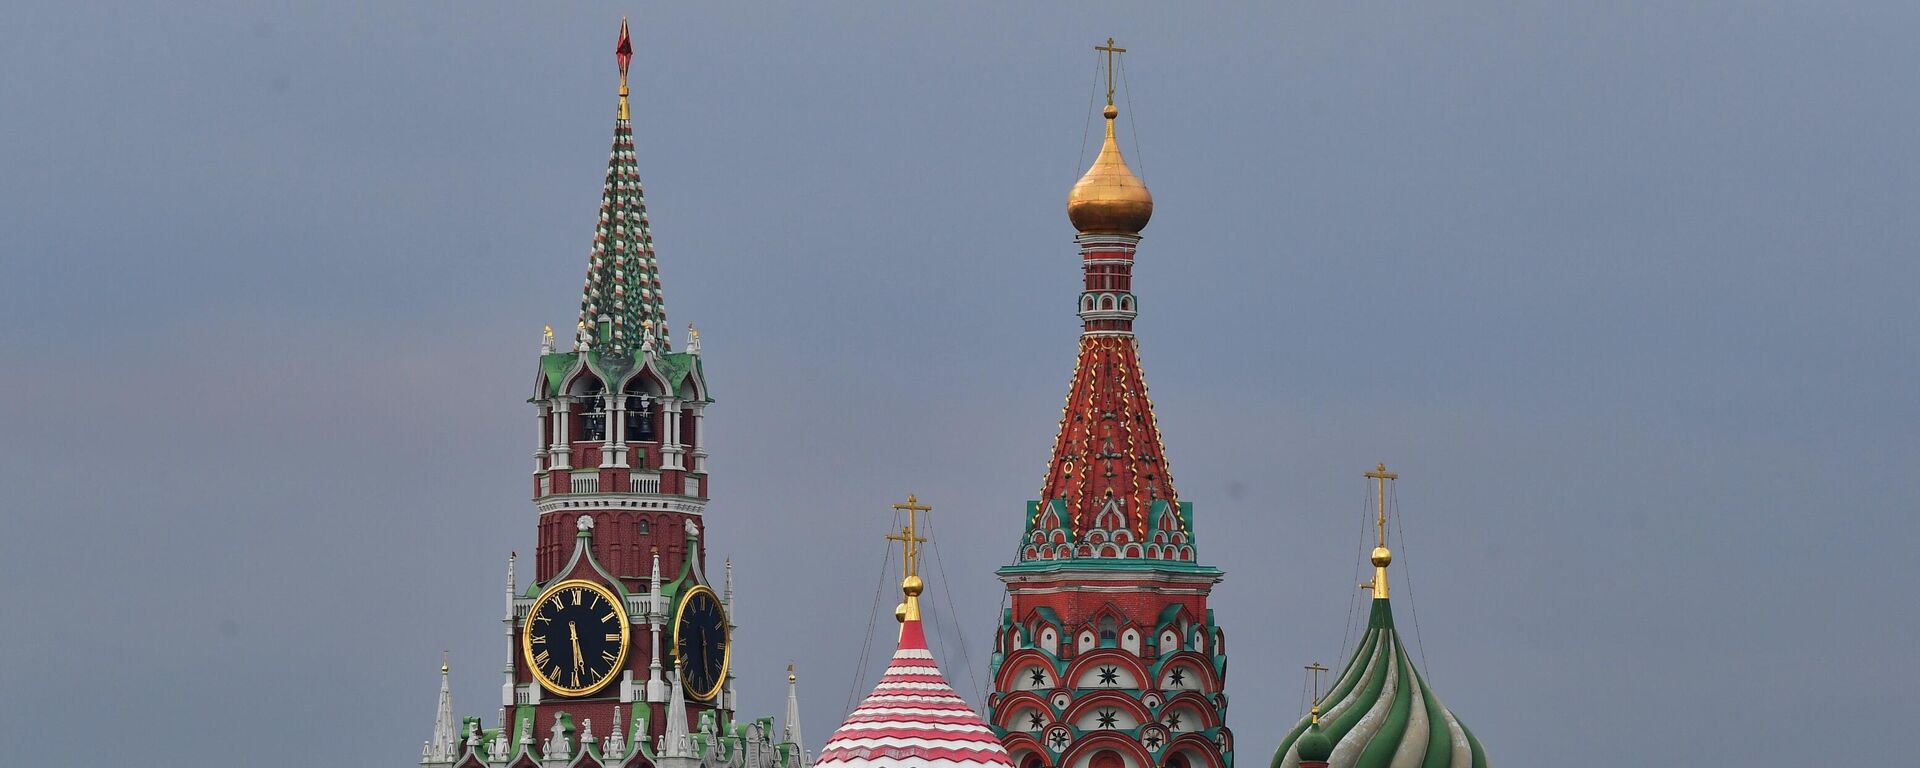 El Kremlin de Moscú - Sputnik Mundo, 1920, 25.10.2021